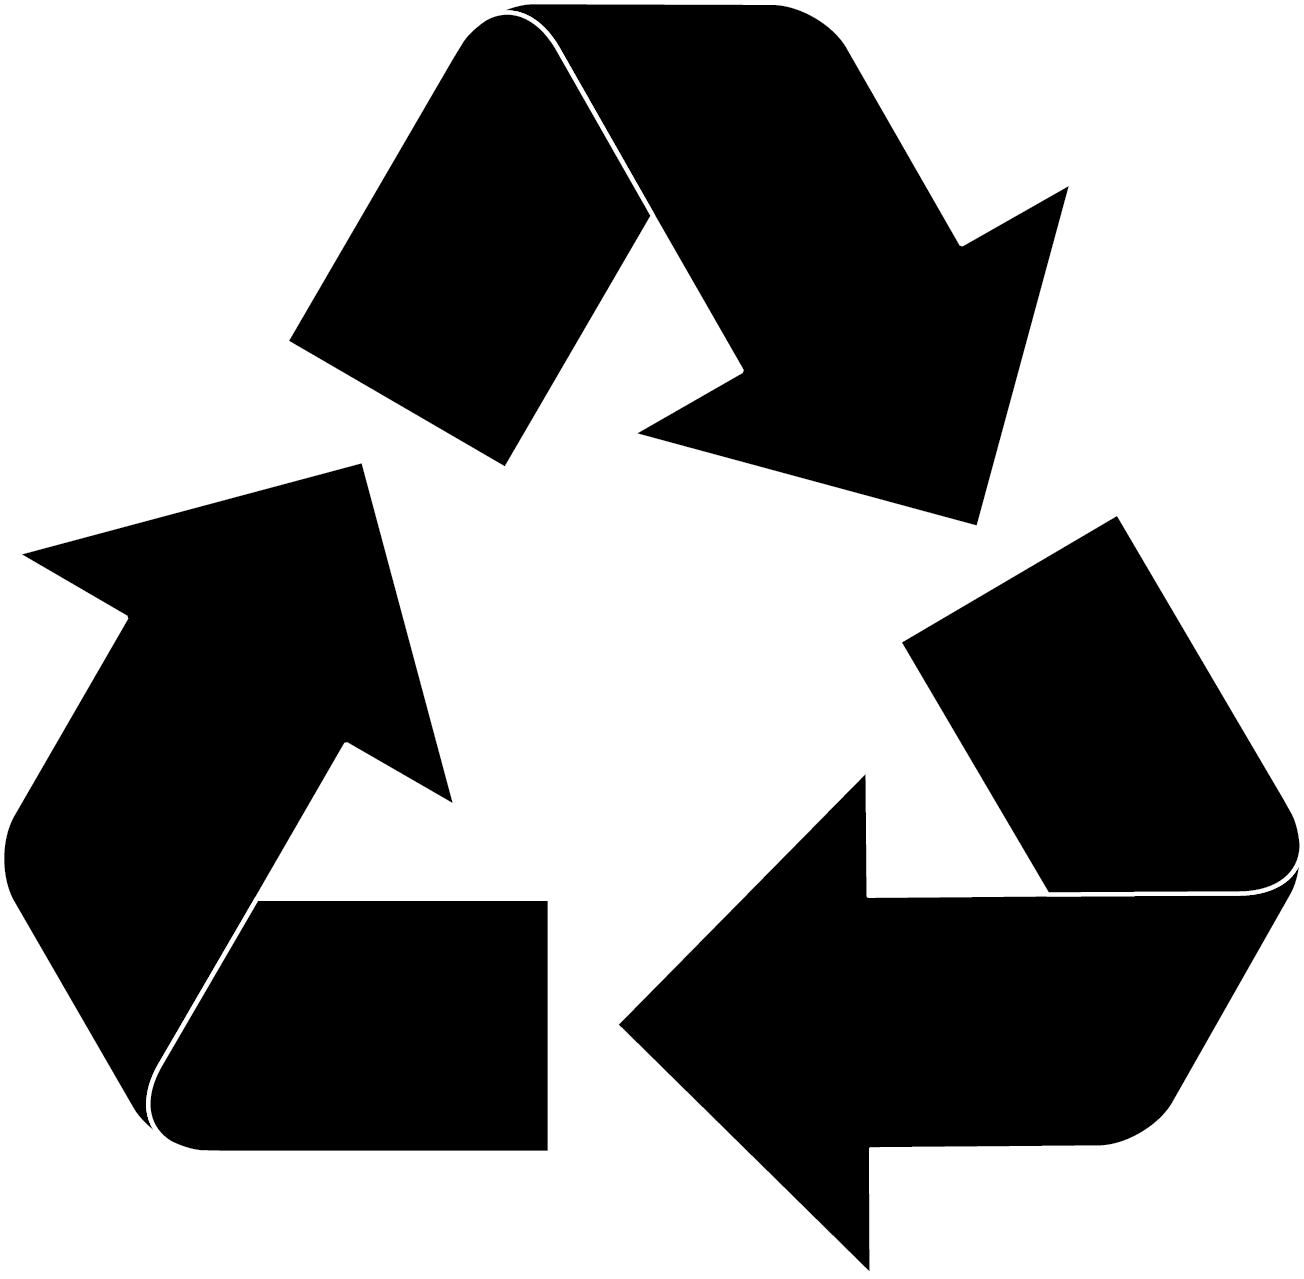 Light green recycling symbol